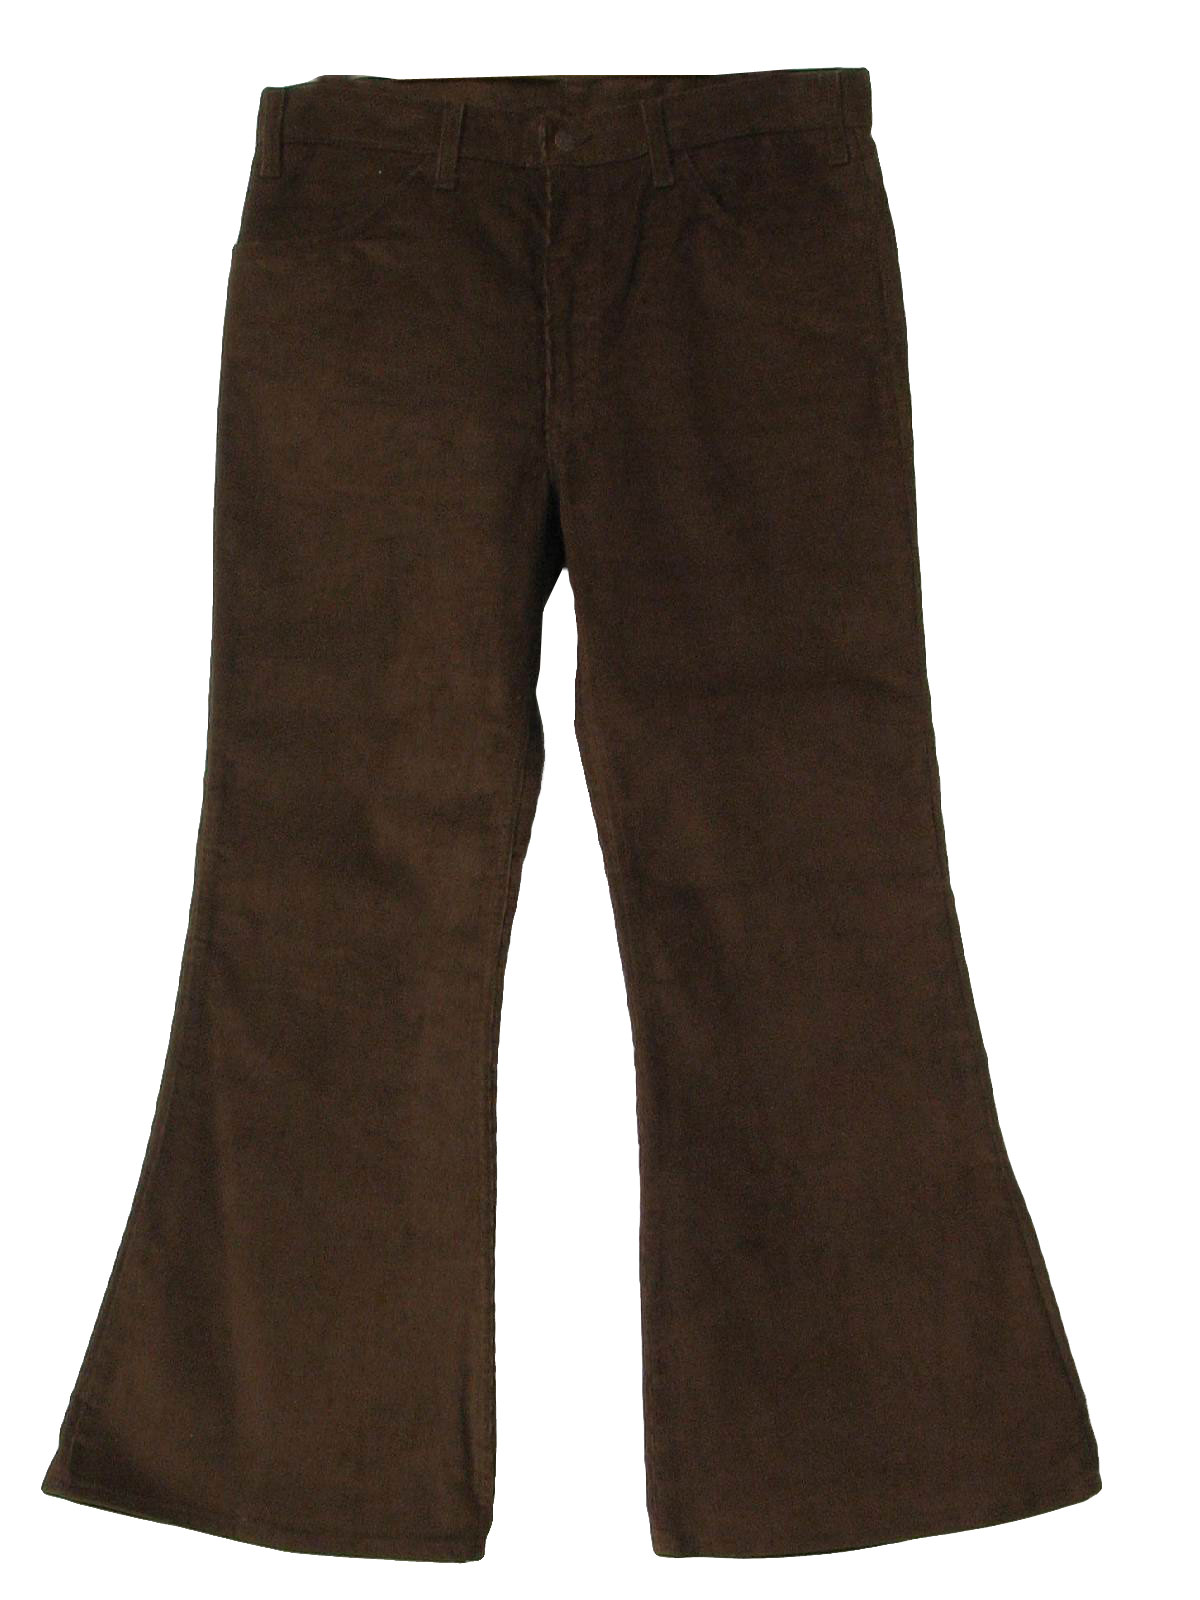 Vintage 1970's Bellbottom Pants: 70s -Levis- Mens warm brown cotton ...